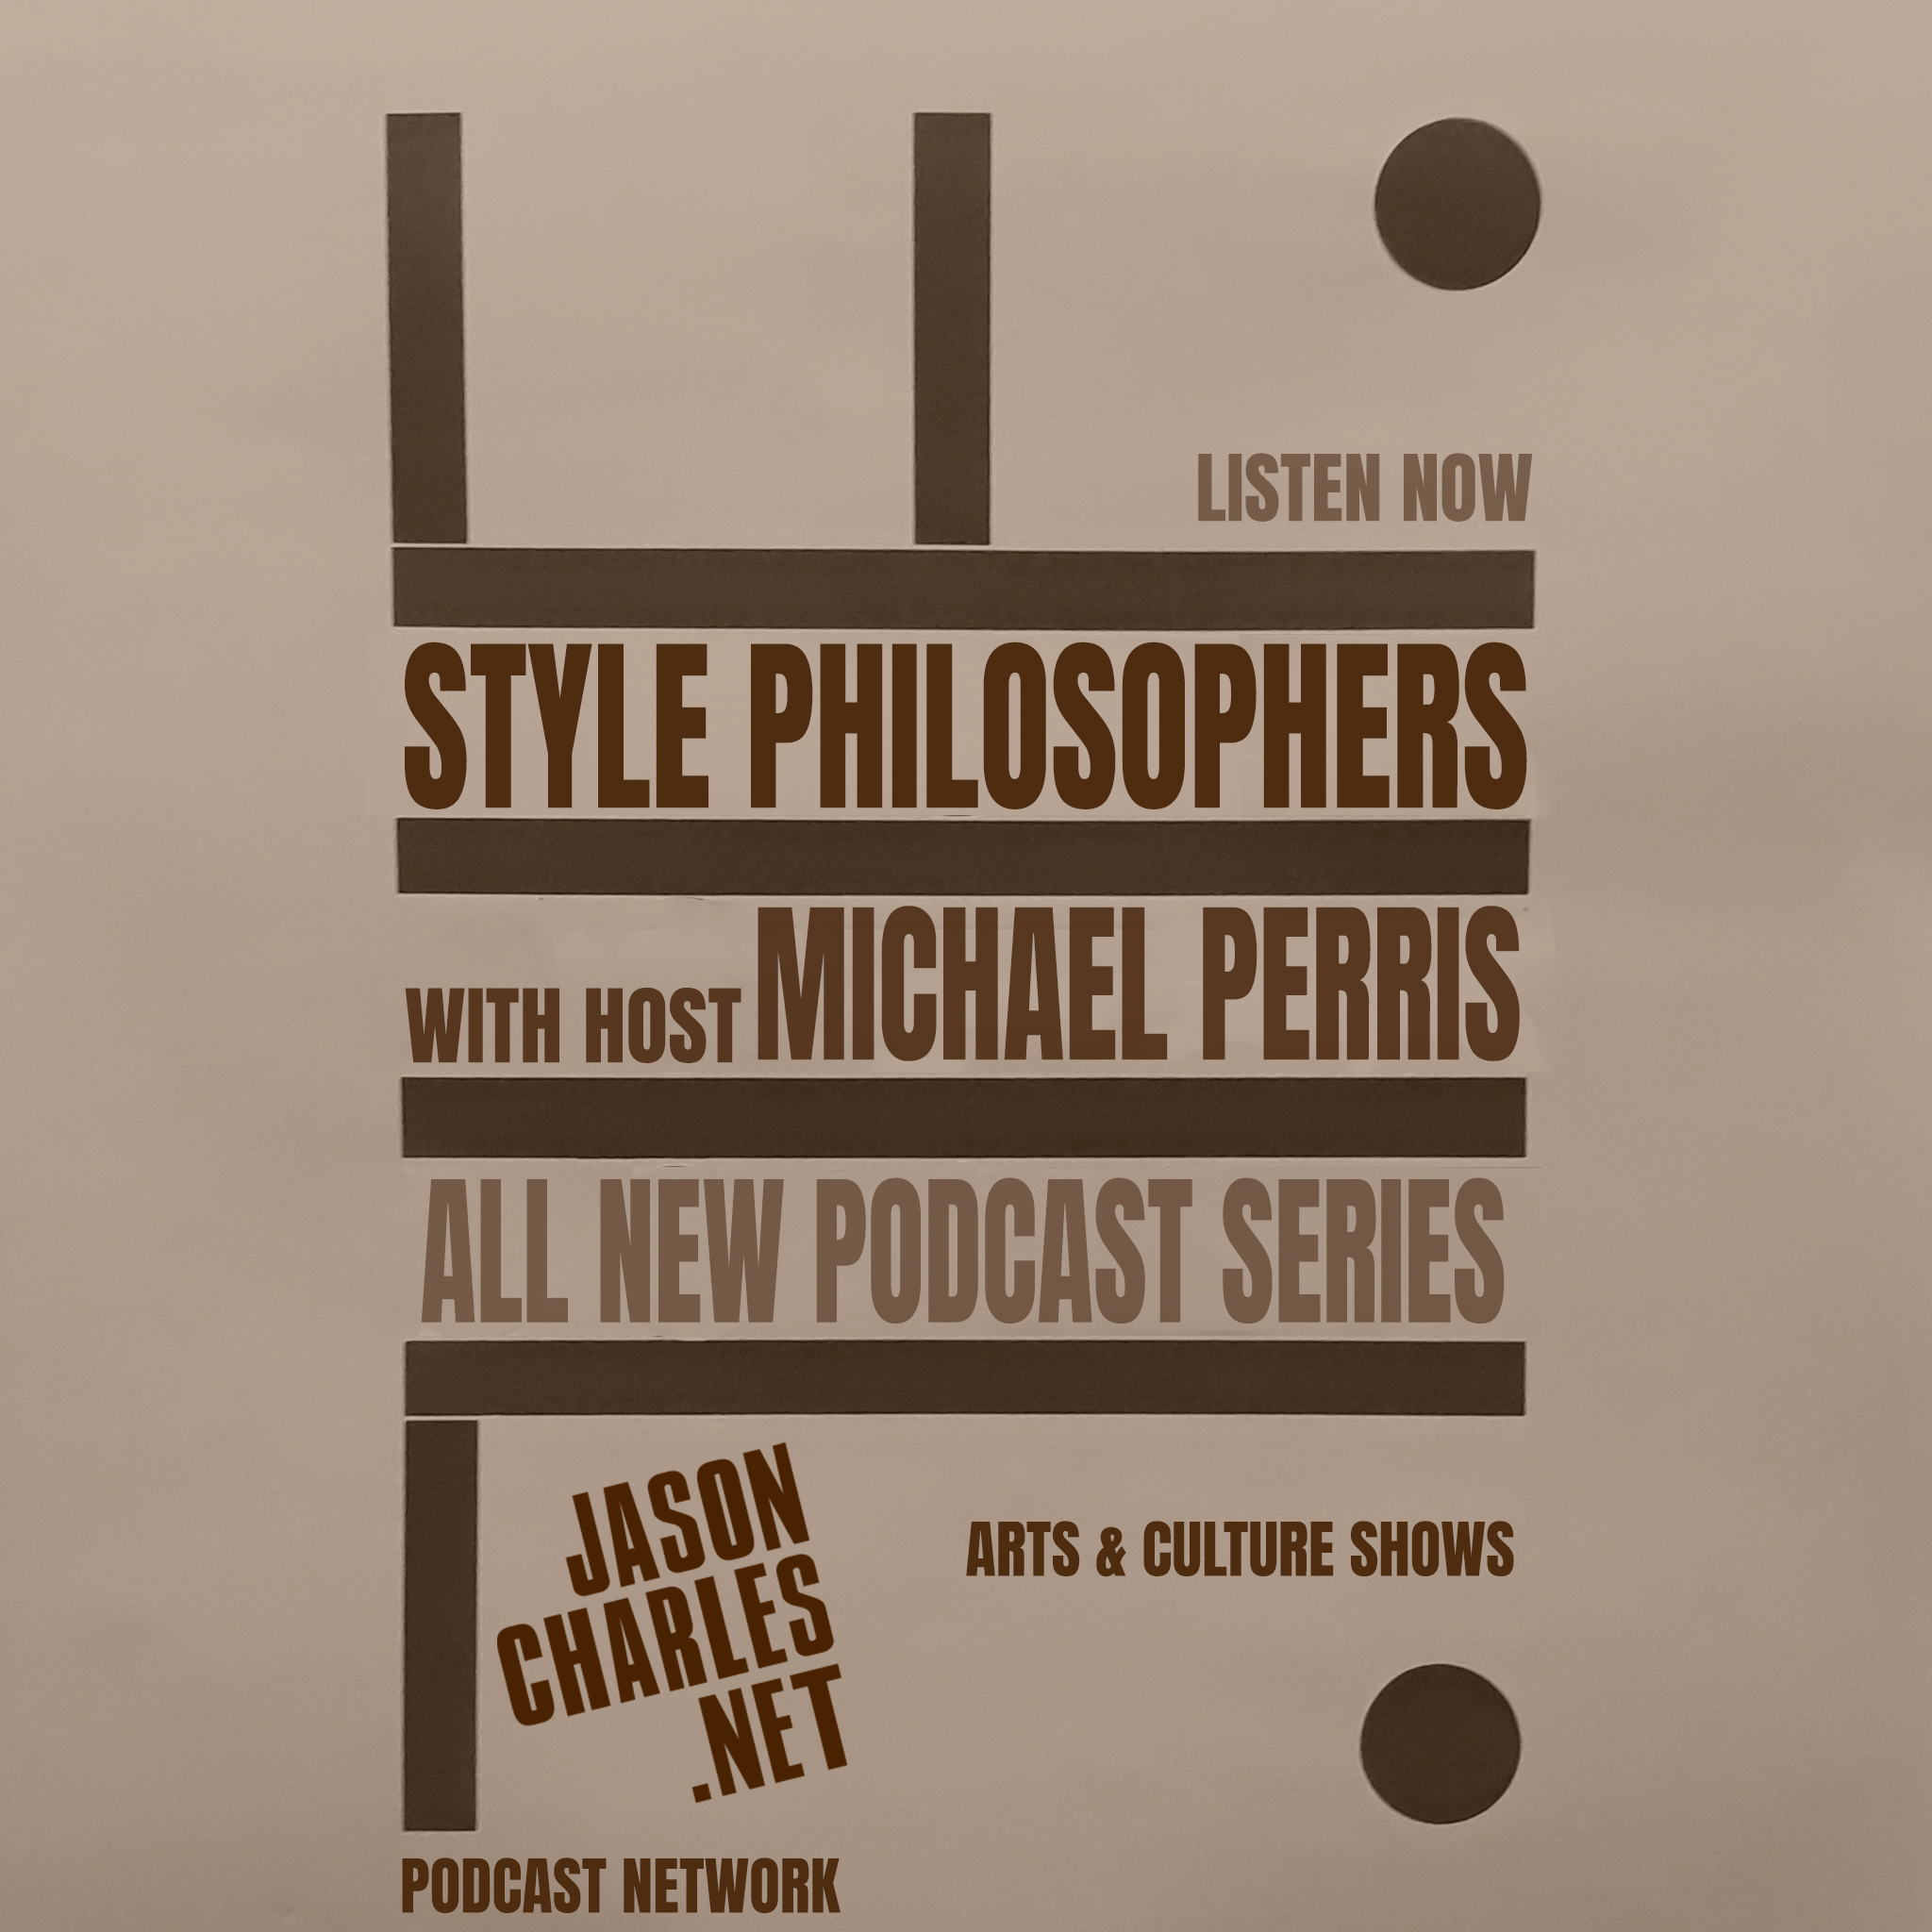 STYLE PHILOSOPHERS with Michael Perris Episode 1 Guest Kim Cihlar